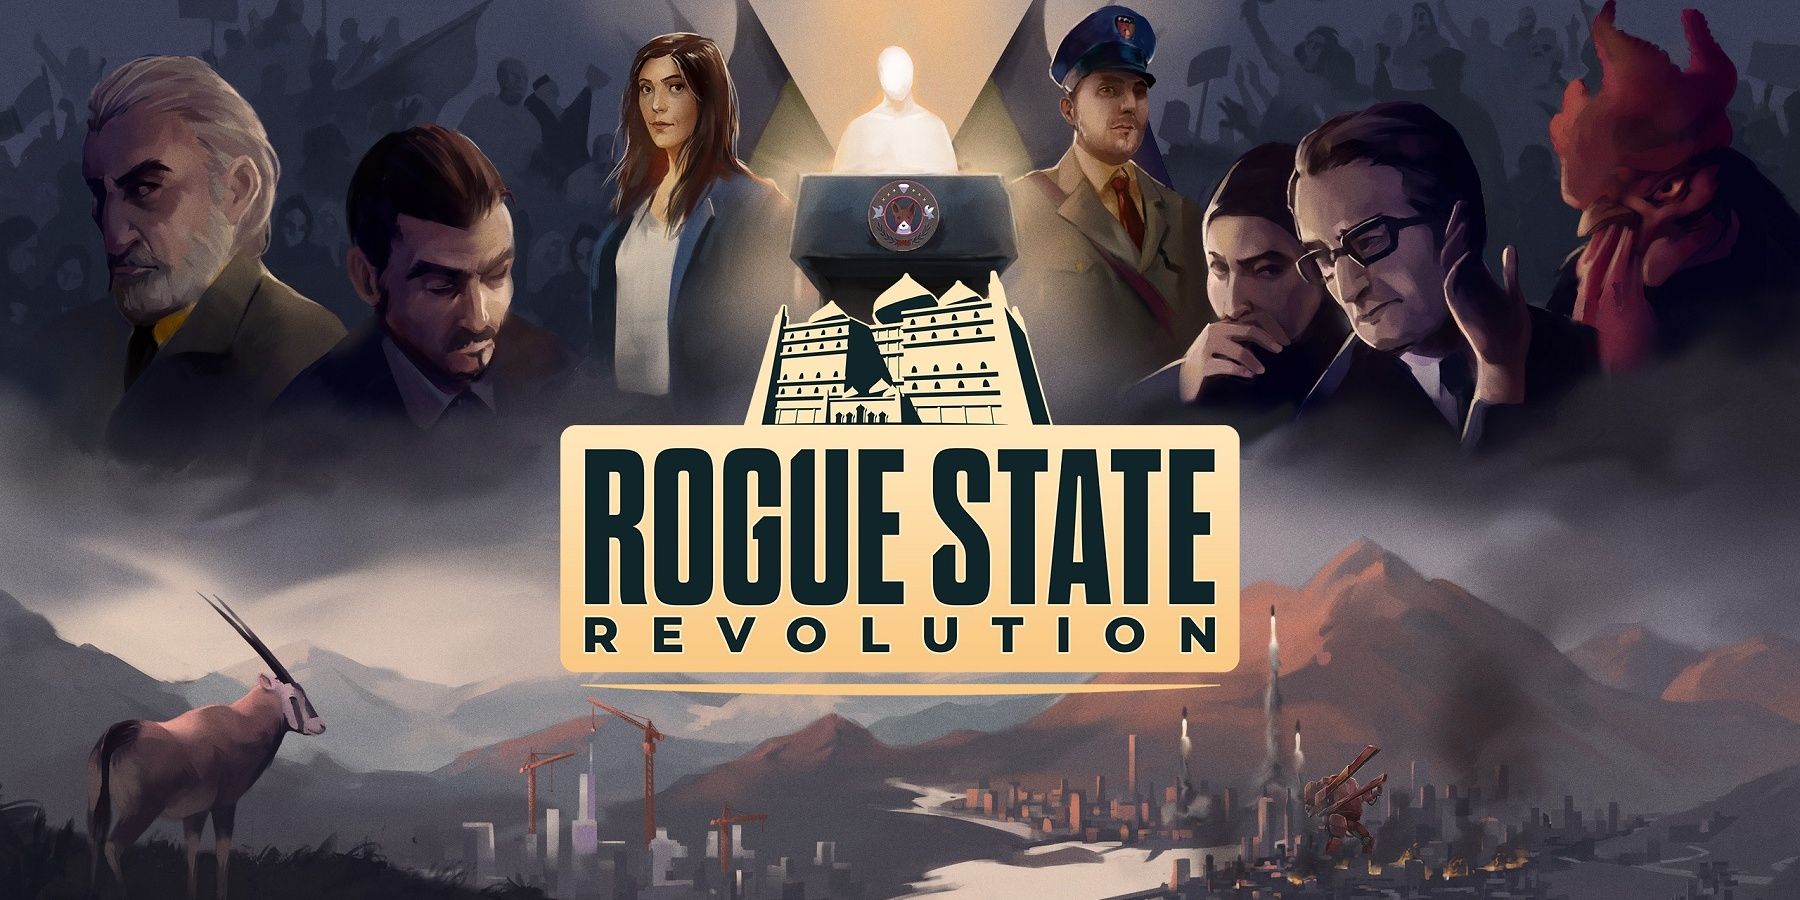 Rogue State Revolution